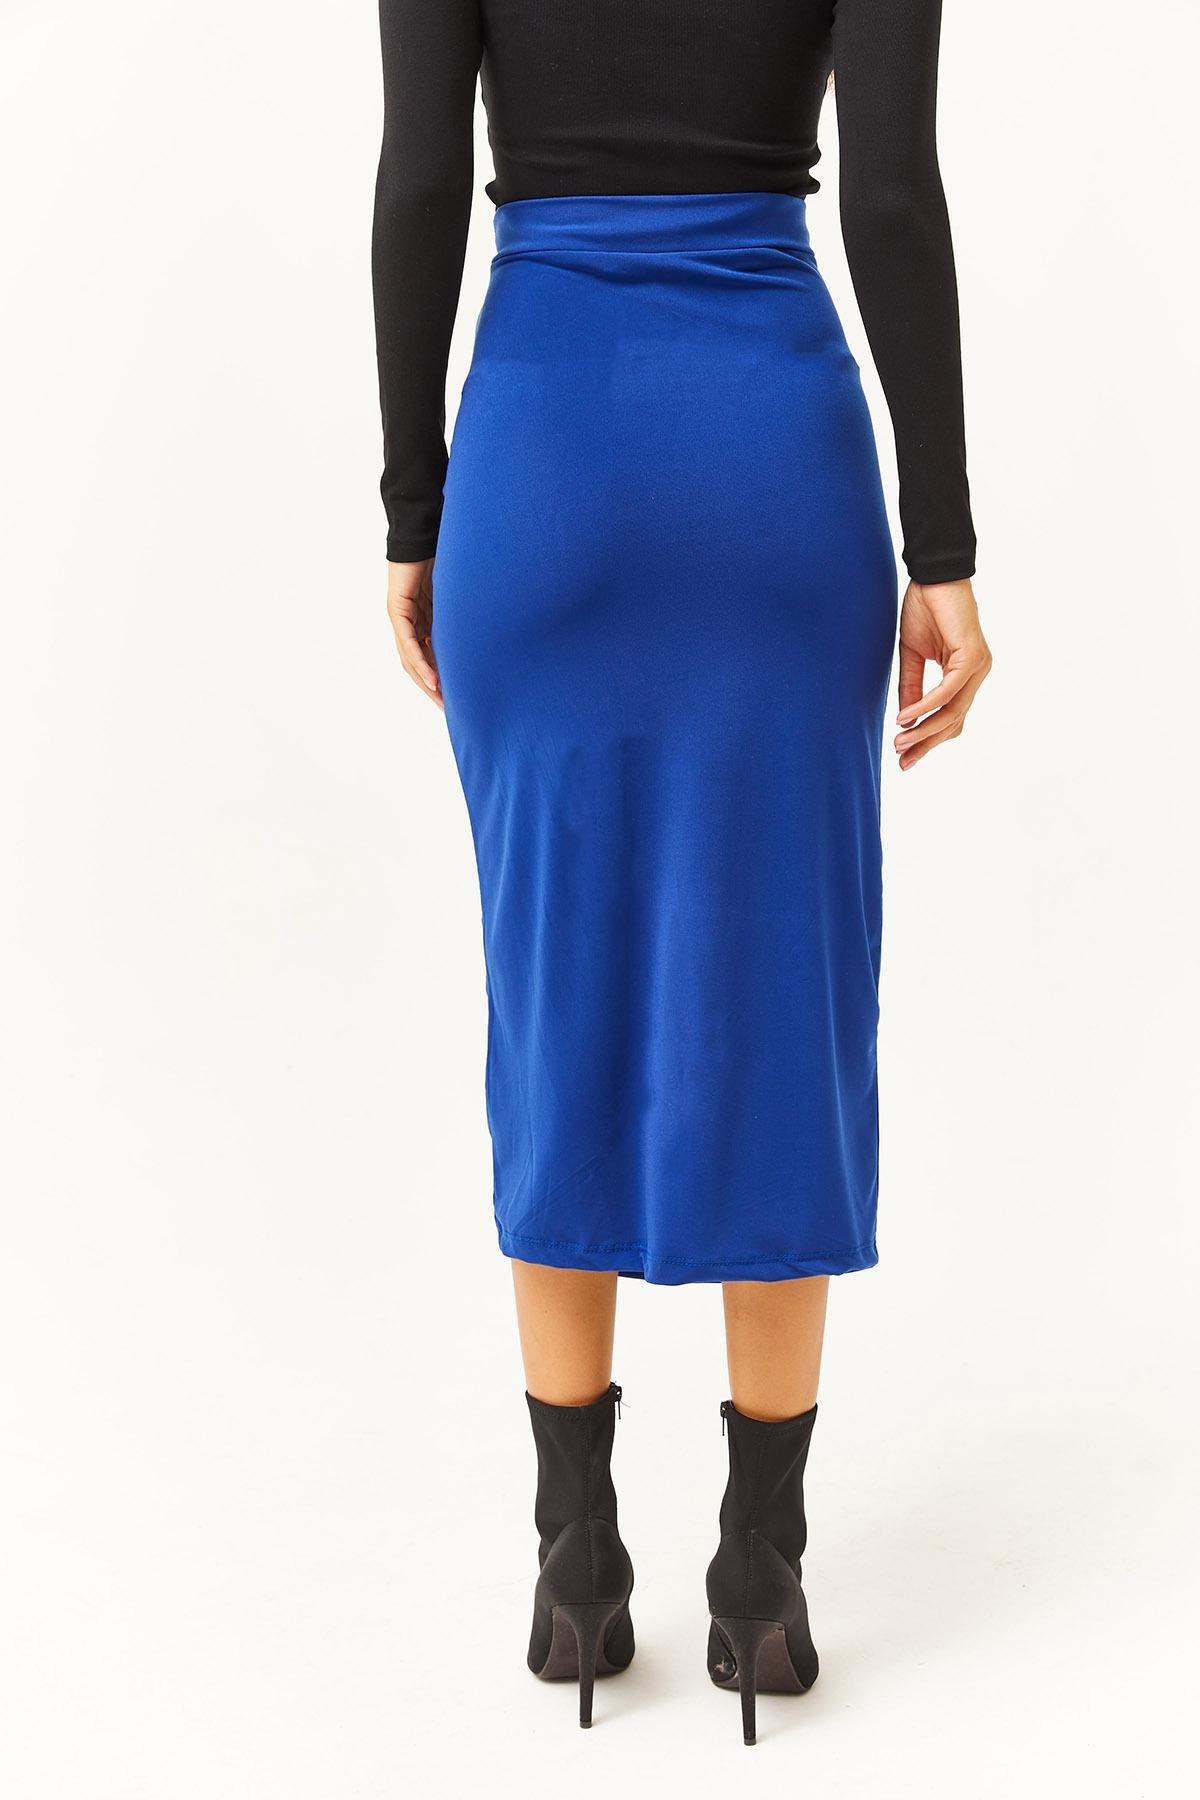 Olalook - Blue Slit Draped Midi Skirt